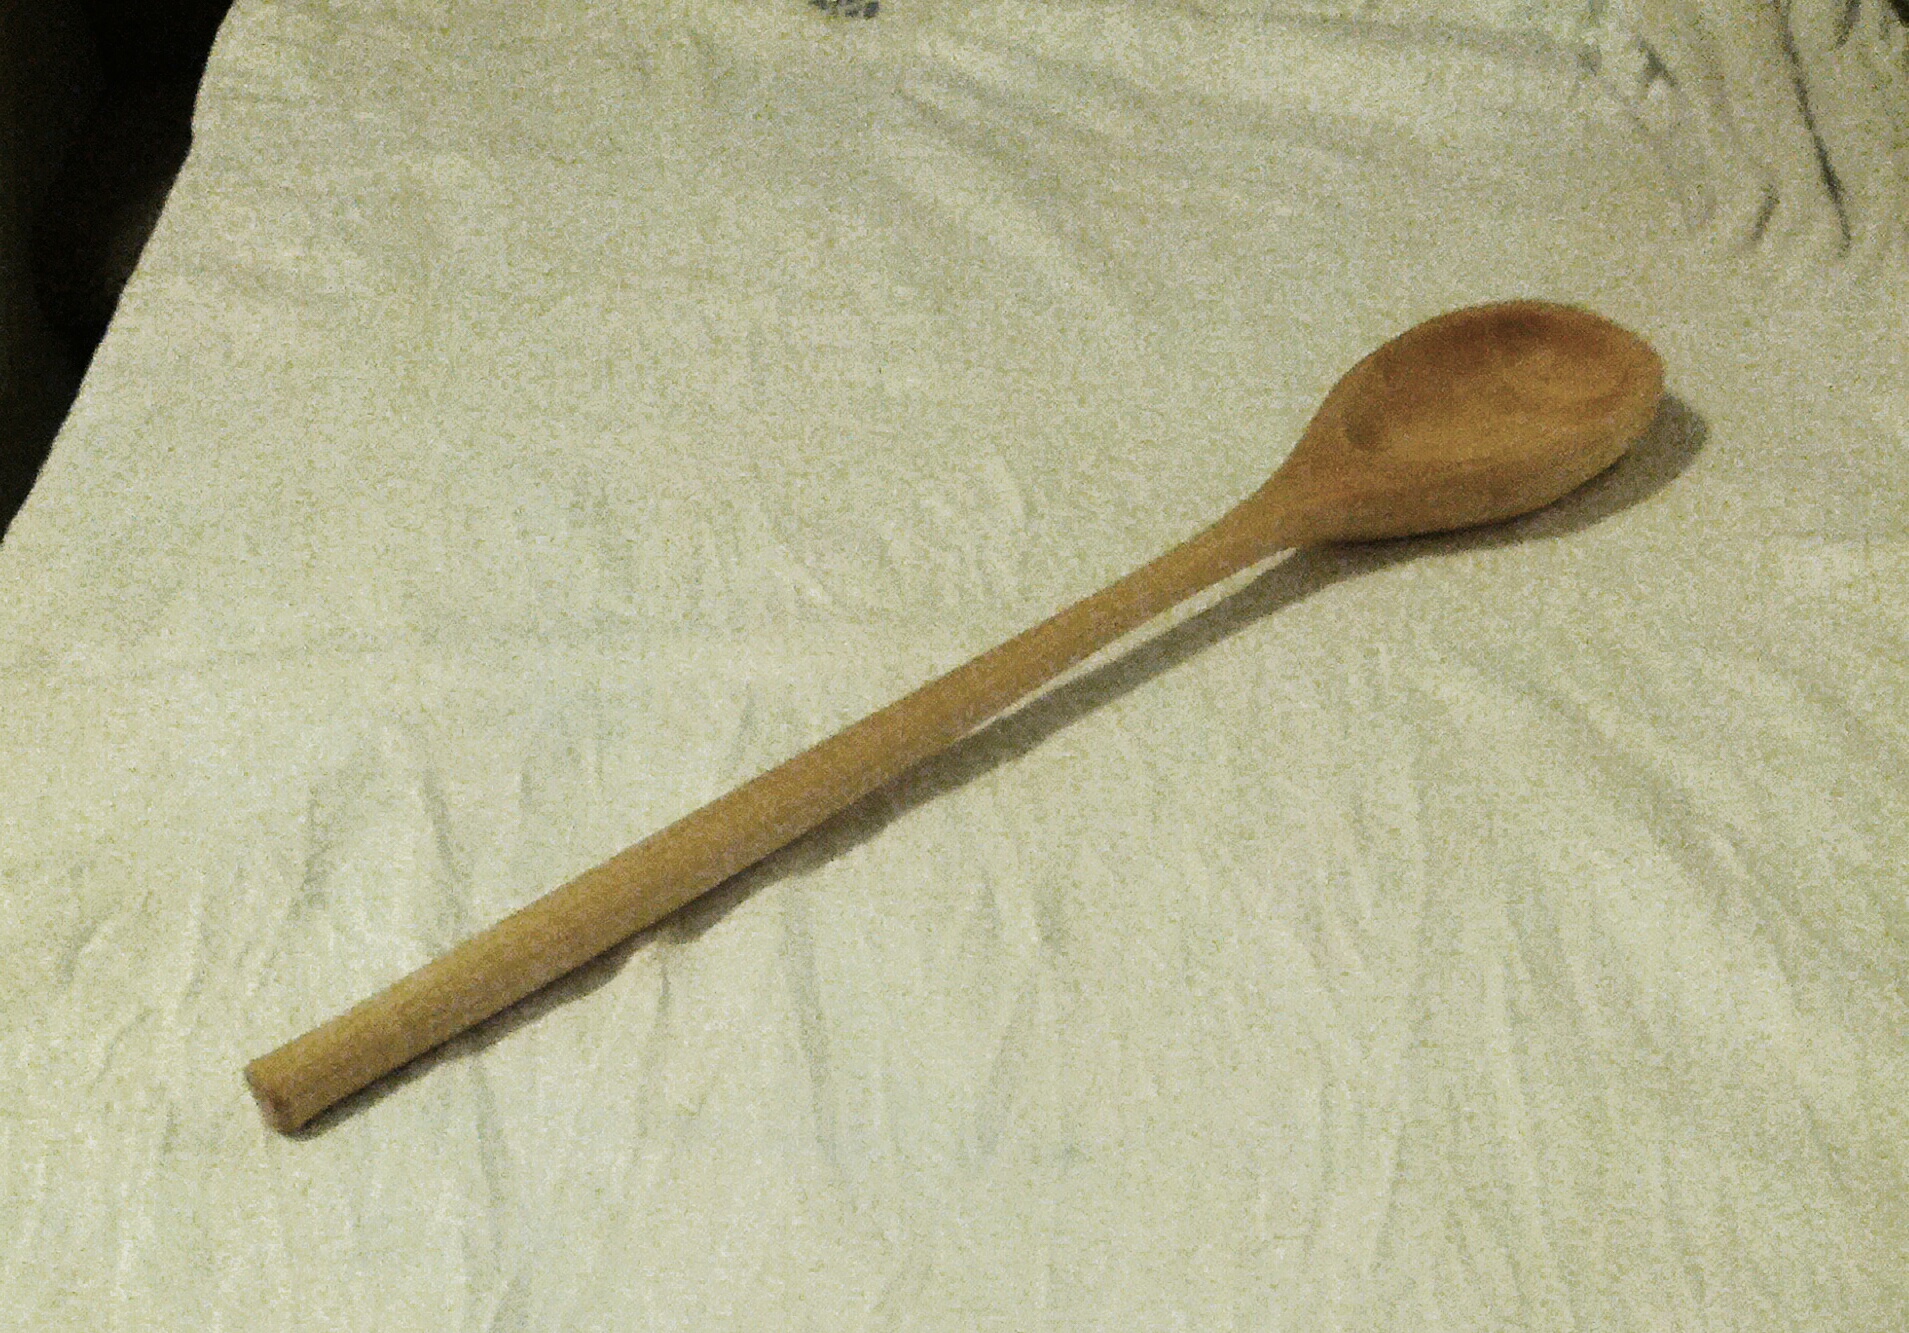 1st spoon